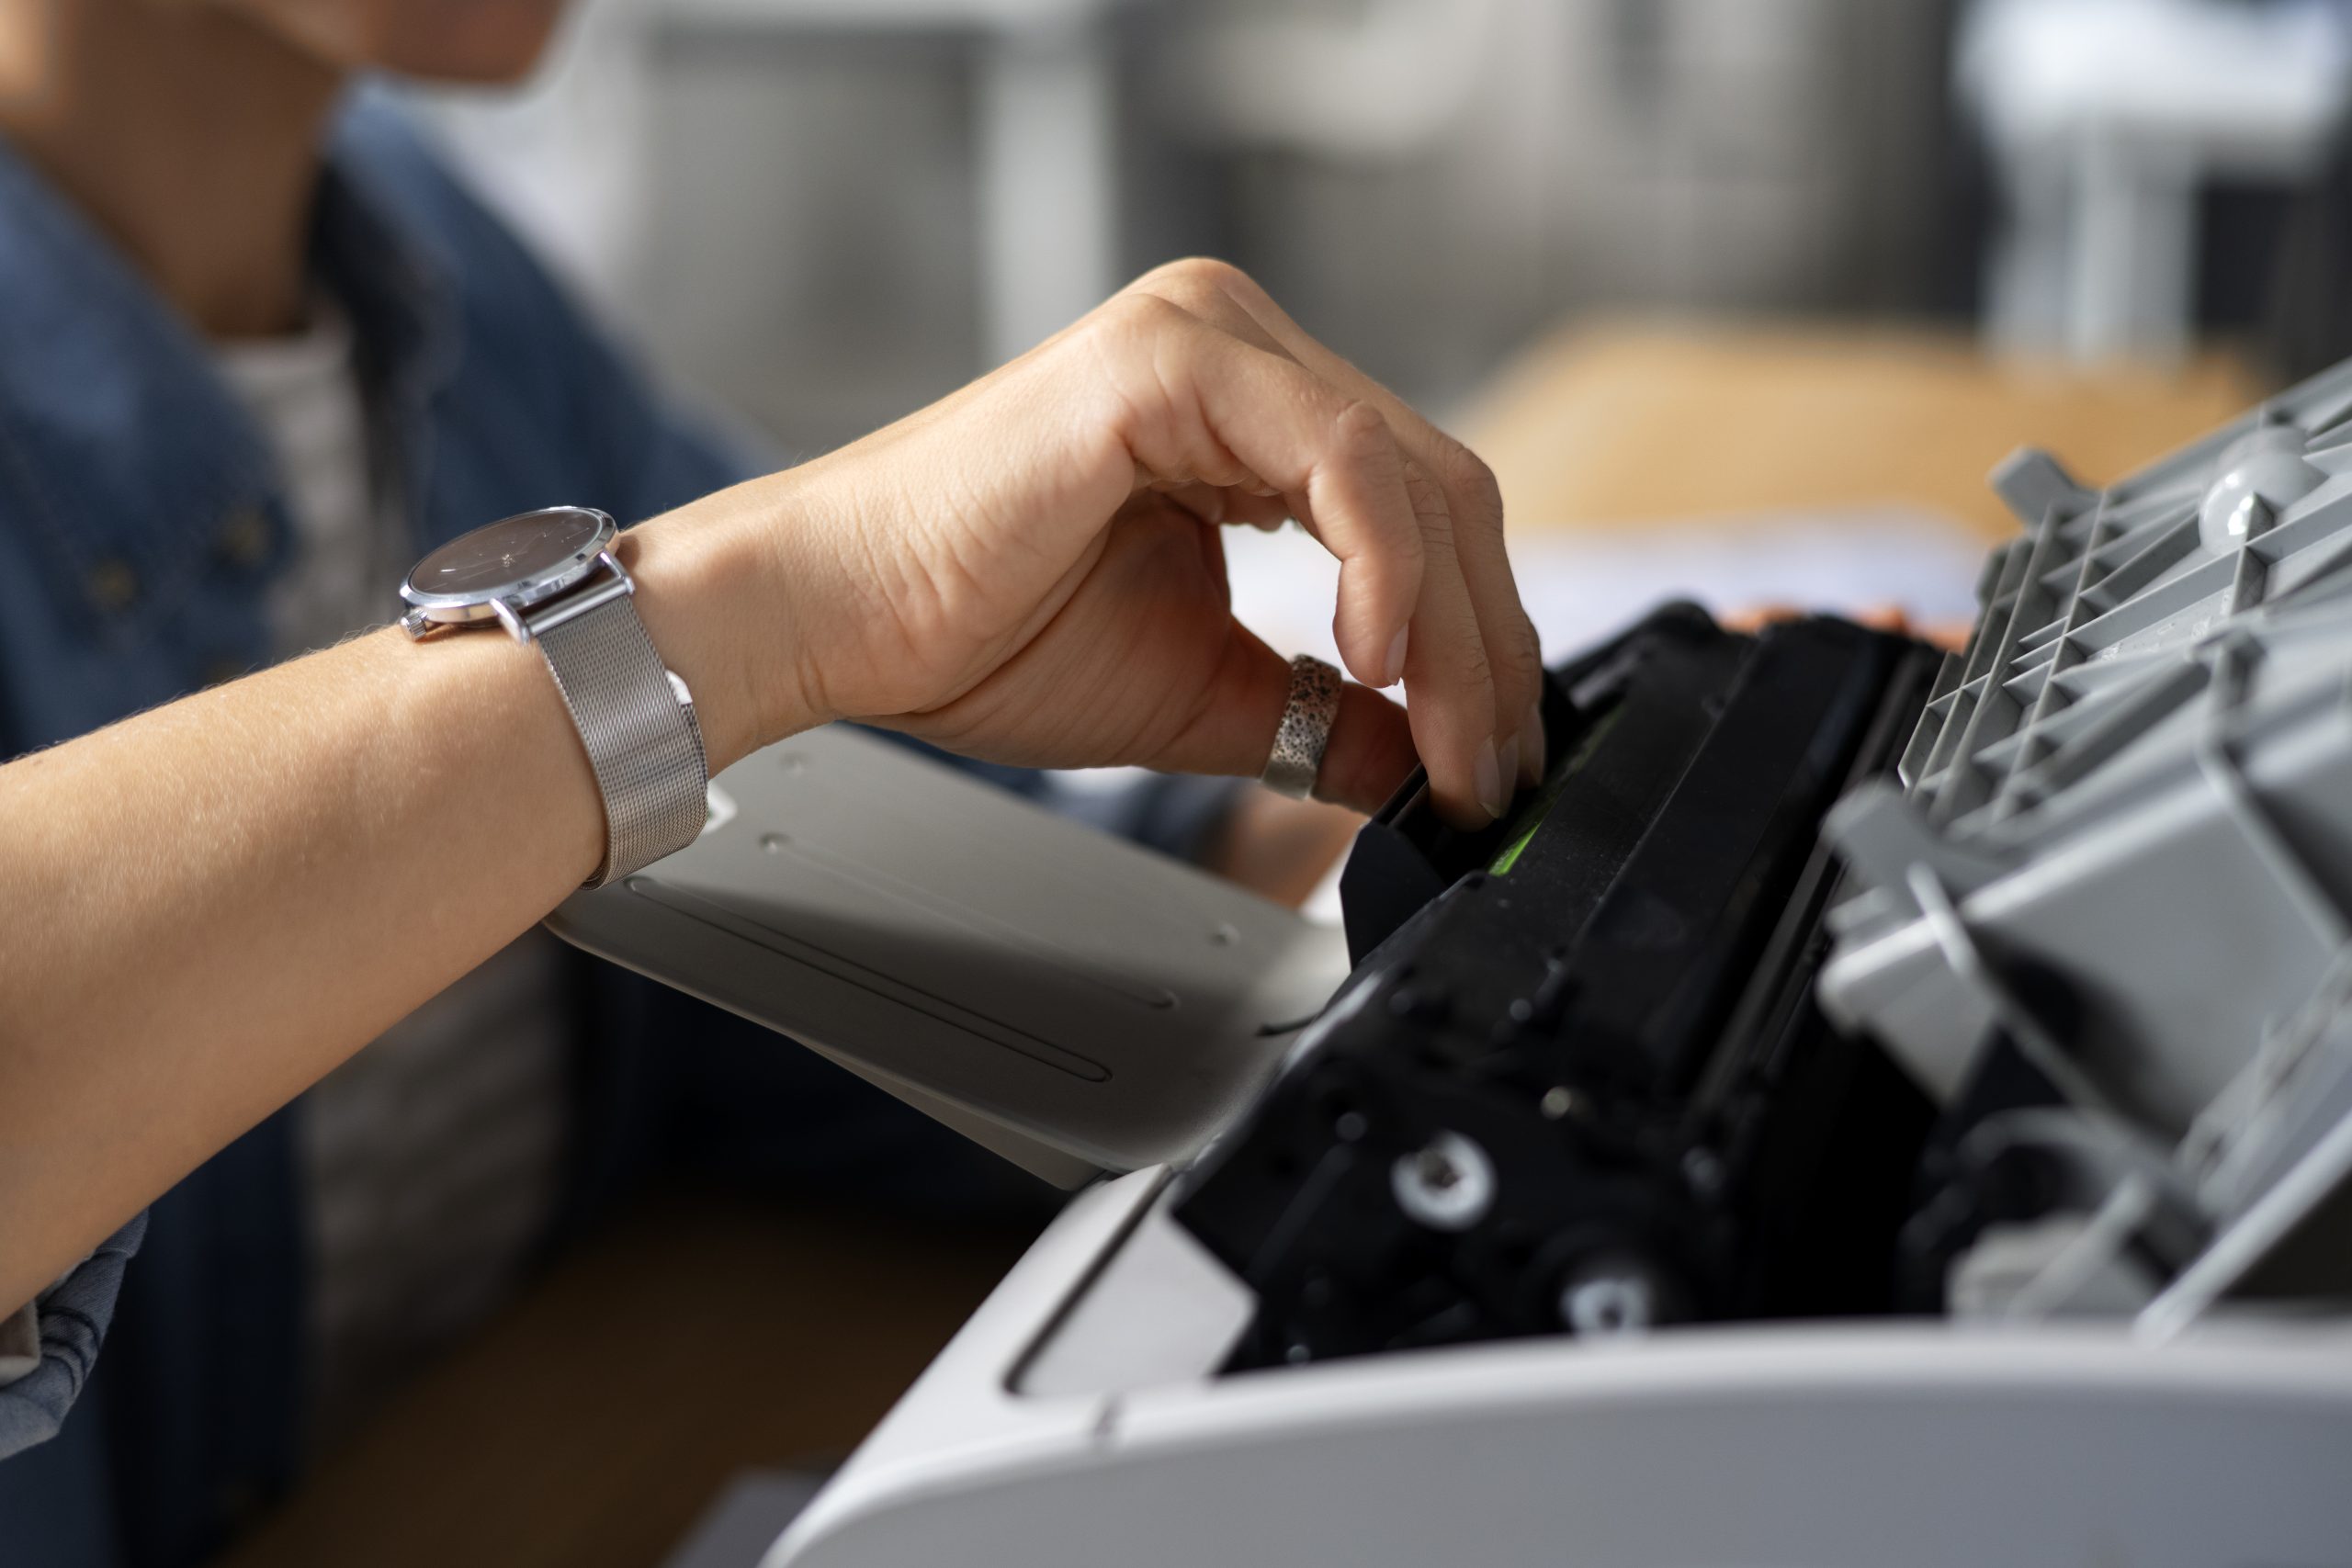 Printer Repairs And Maintenance | Meimag Electronics